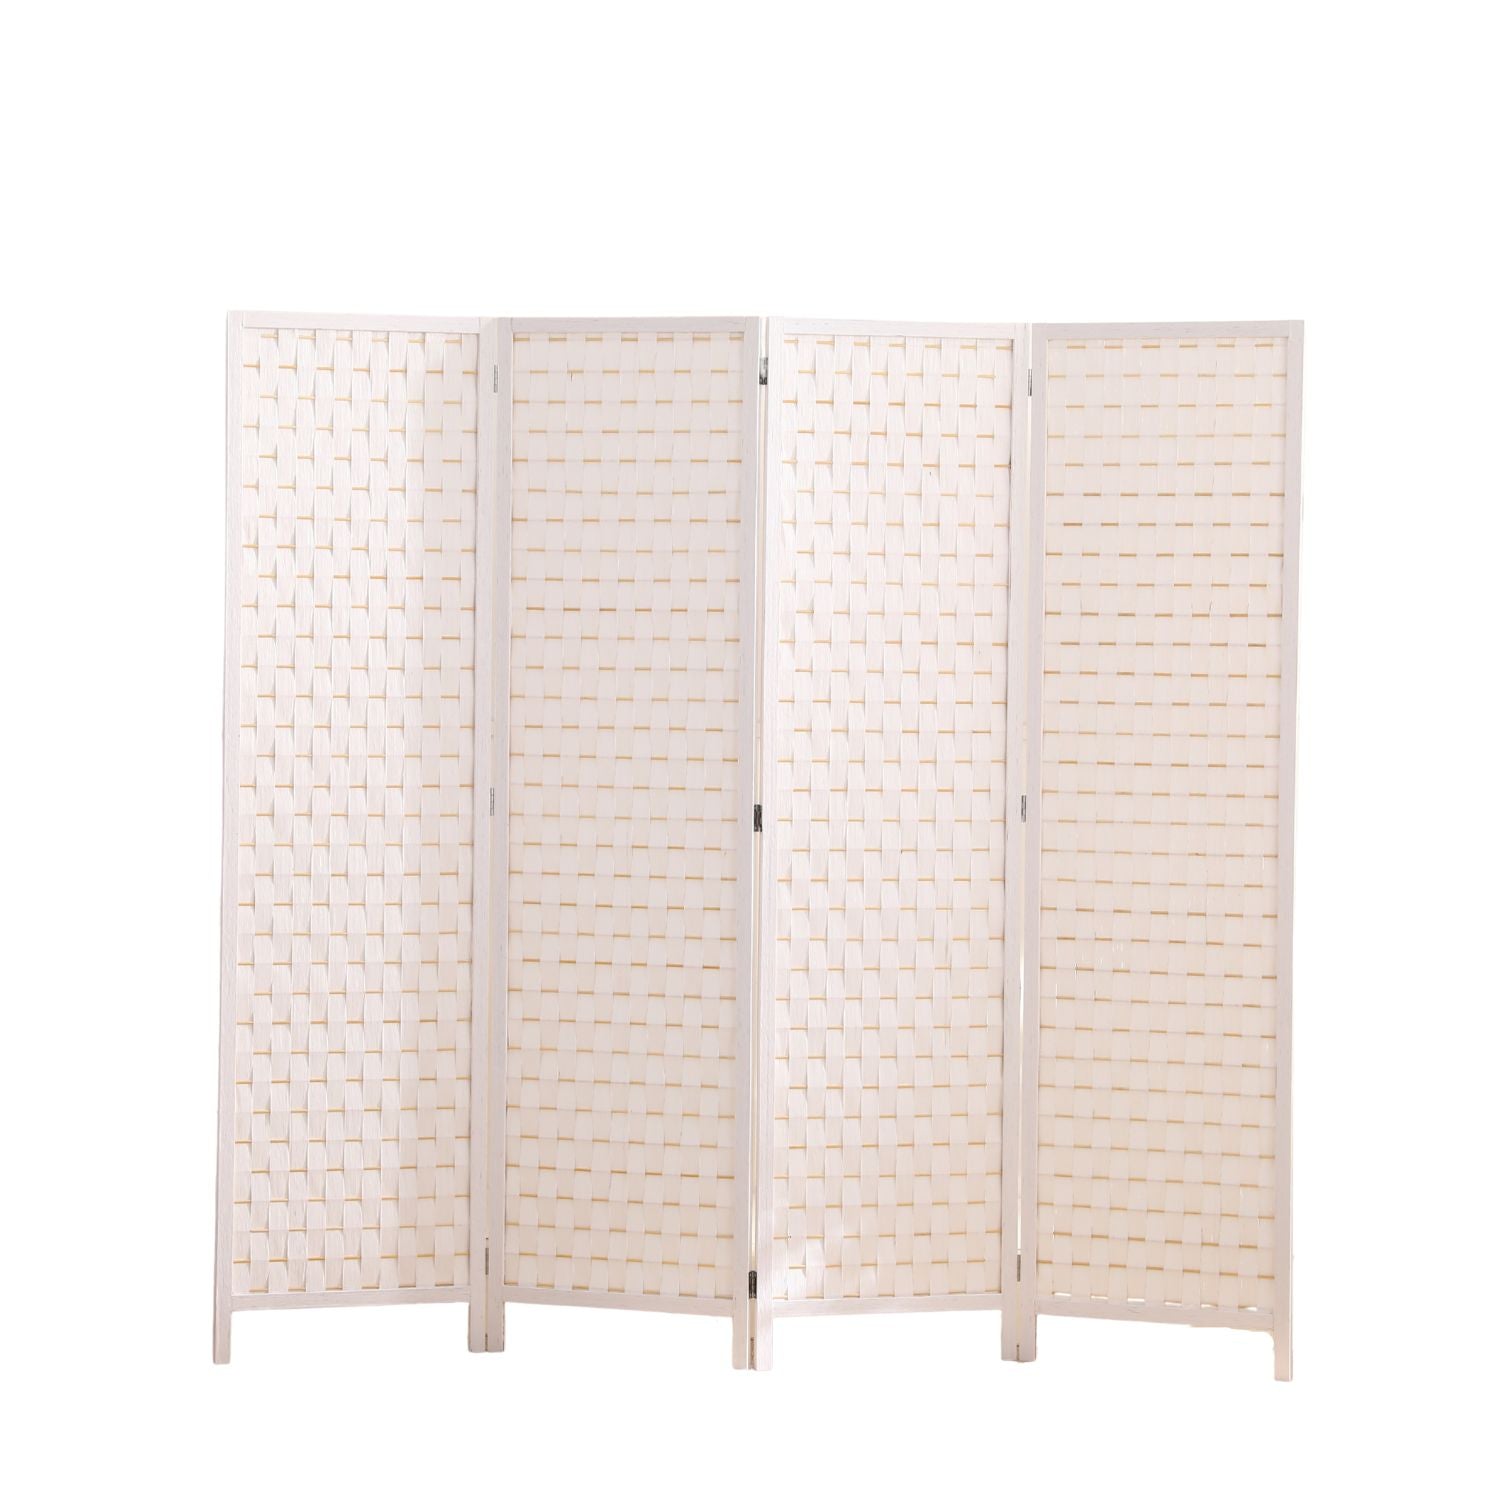 EKKIO 4-Panel Pine Wood Room Divider - White | Functional and Decorative (EK-RD-101-SD)